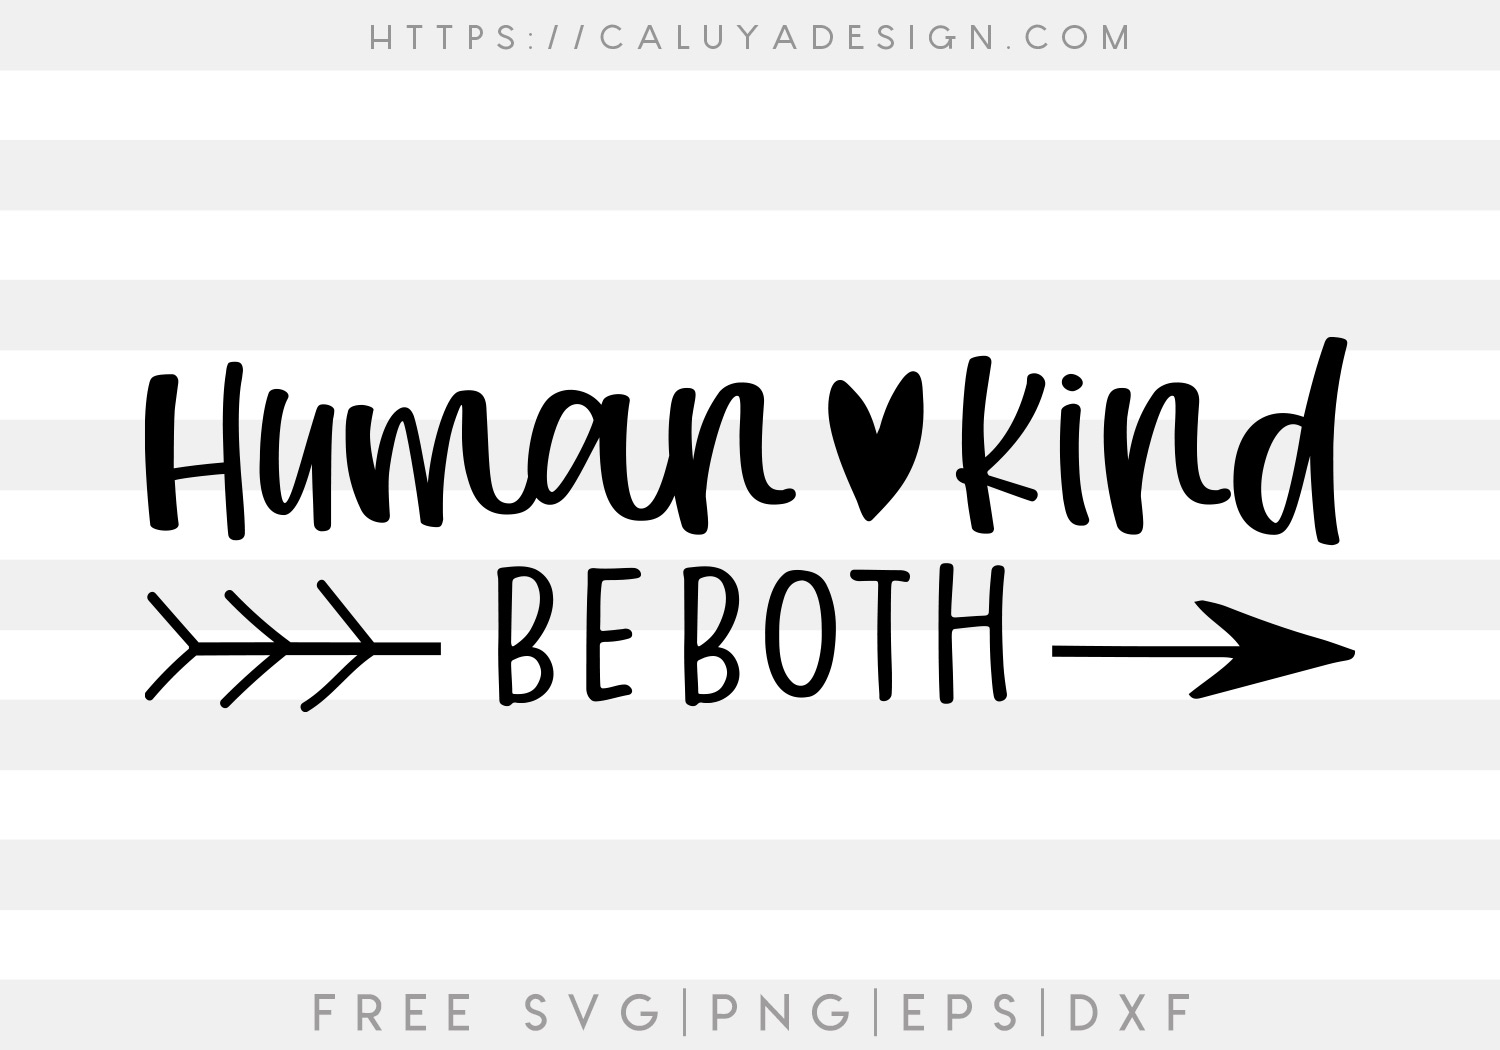 Free Human Kind Be Both SVG Cut File